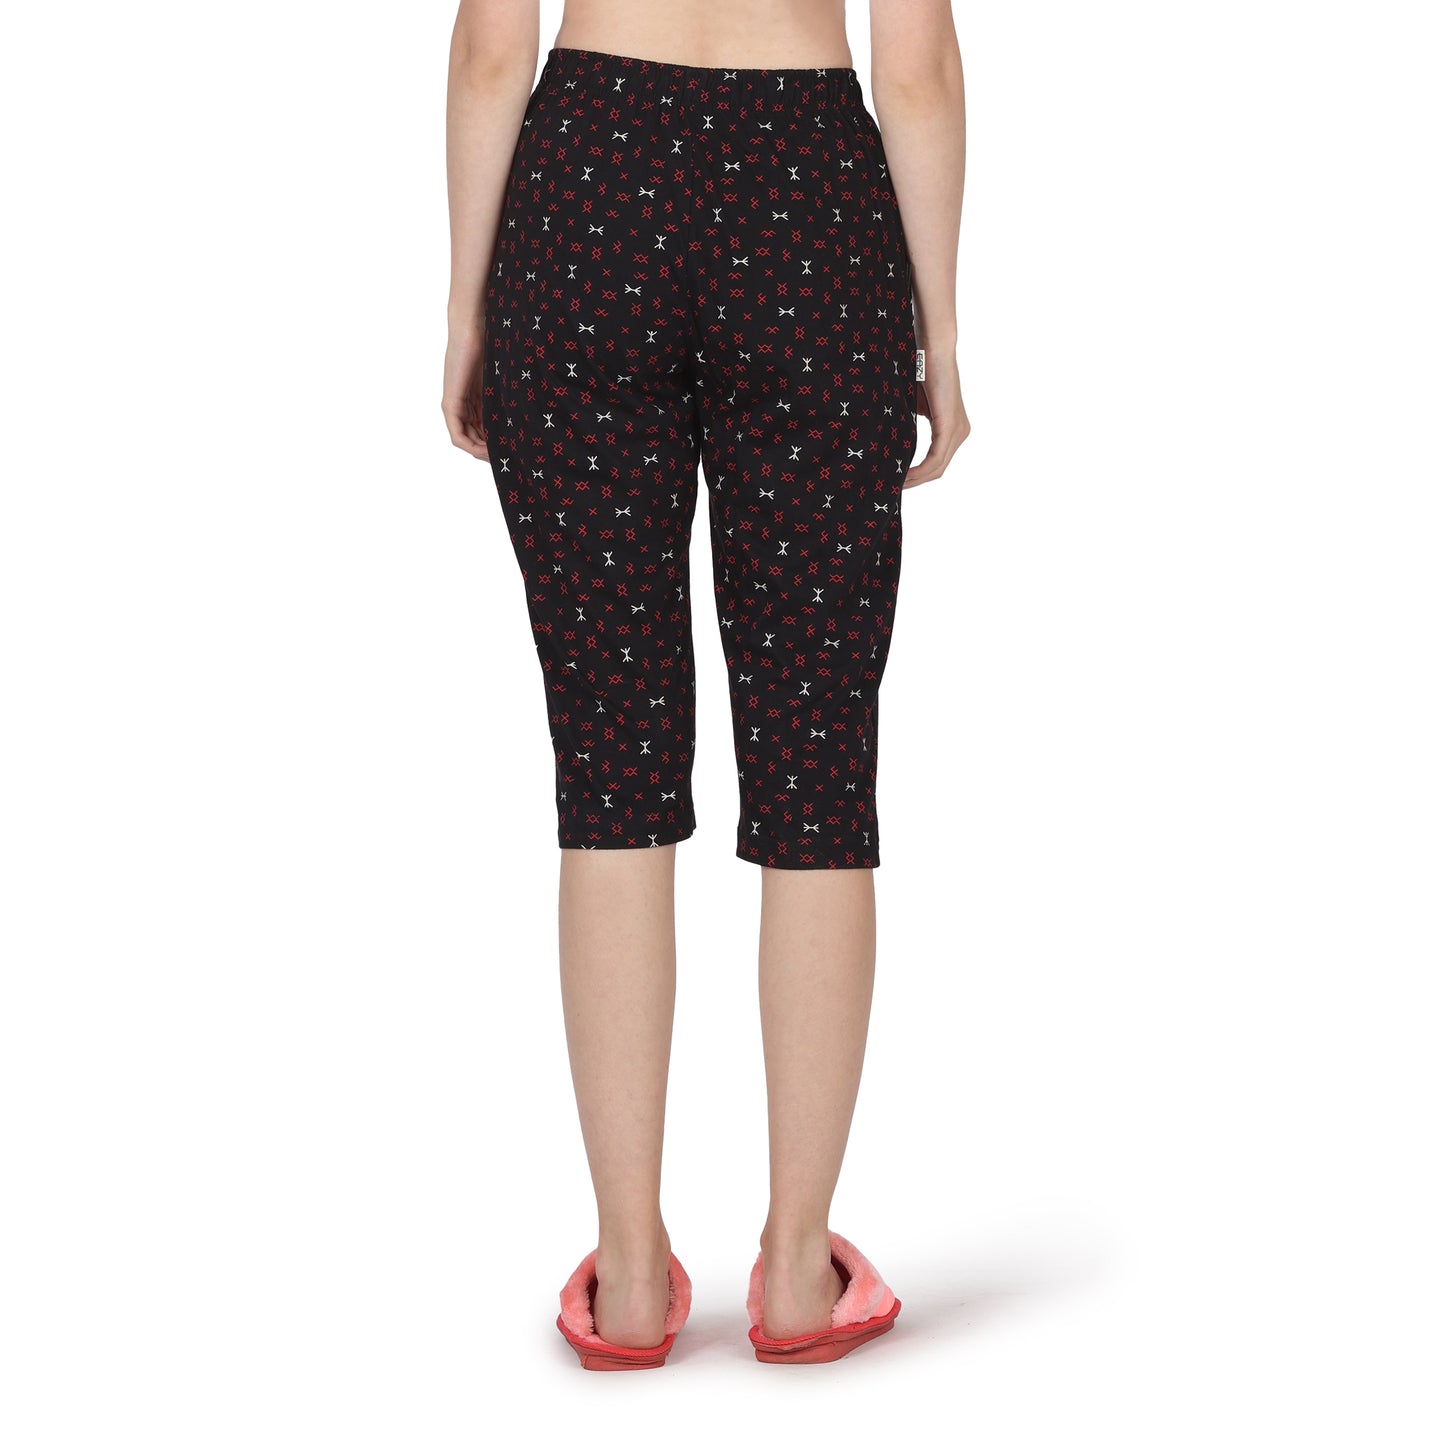 Eazy Women's Printed Capri Pants- Pack of 2- Black & Cherry Red